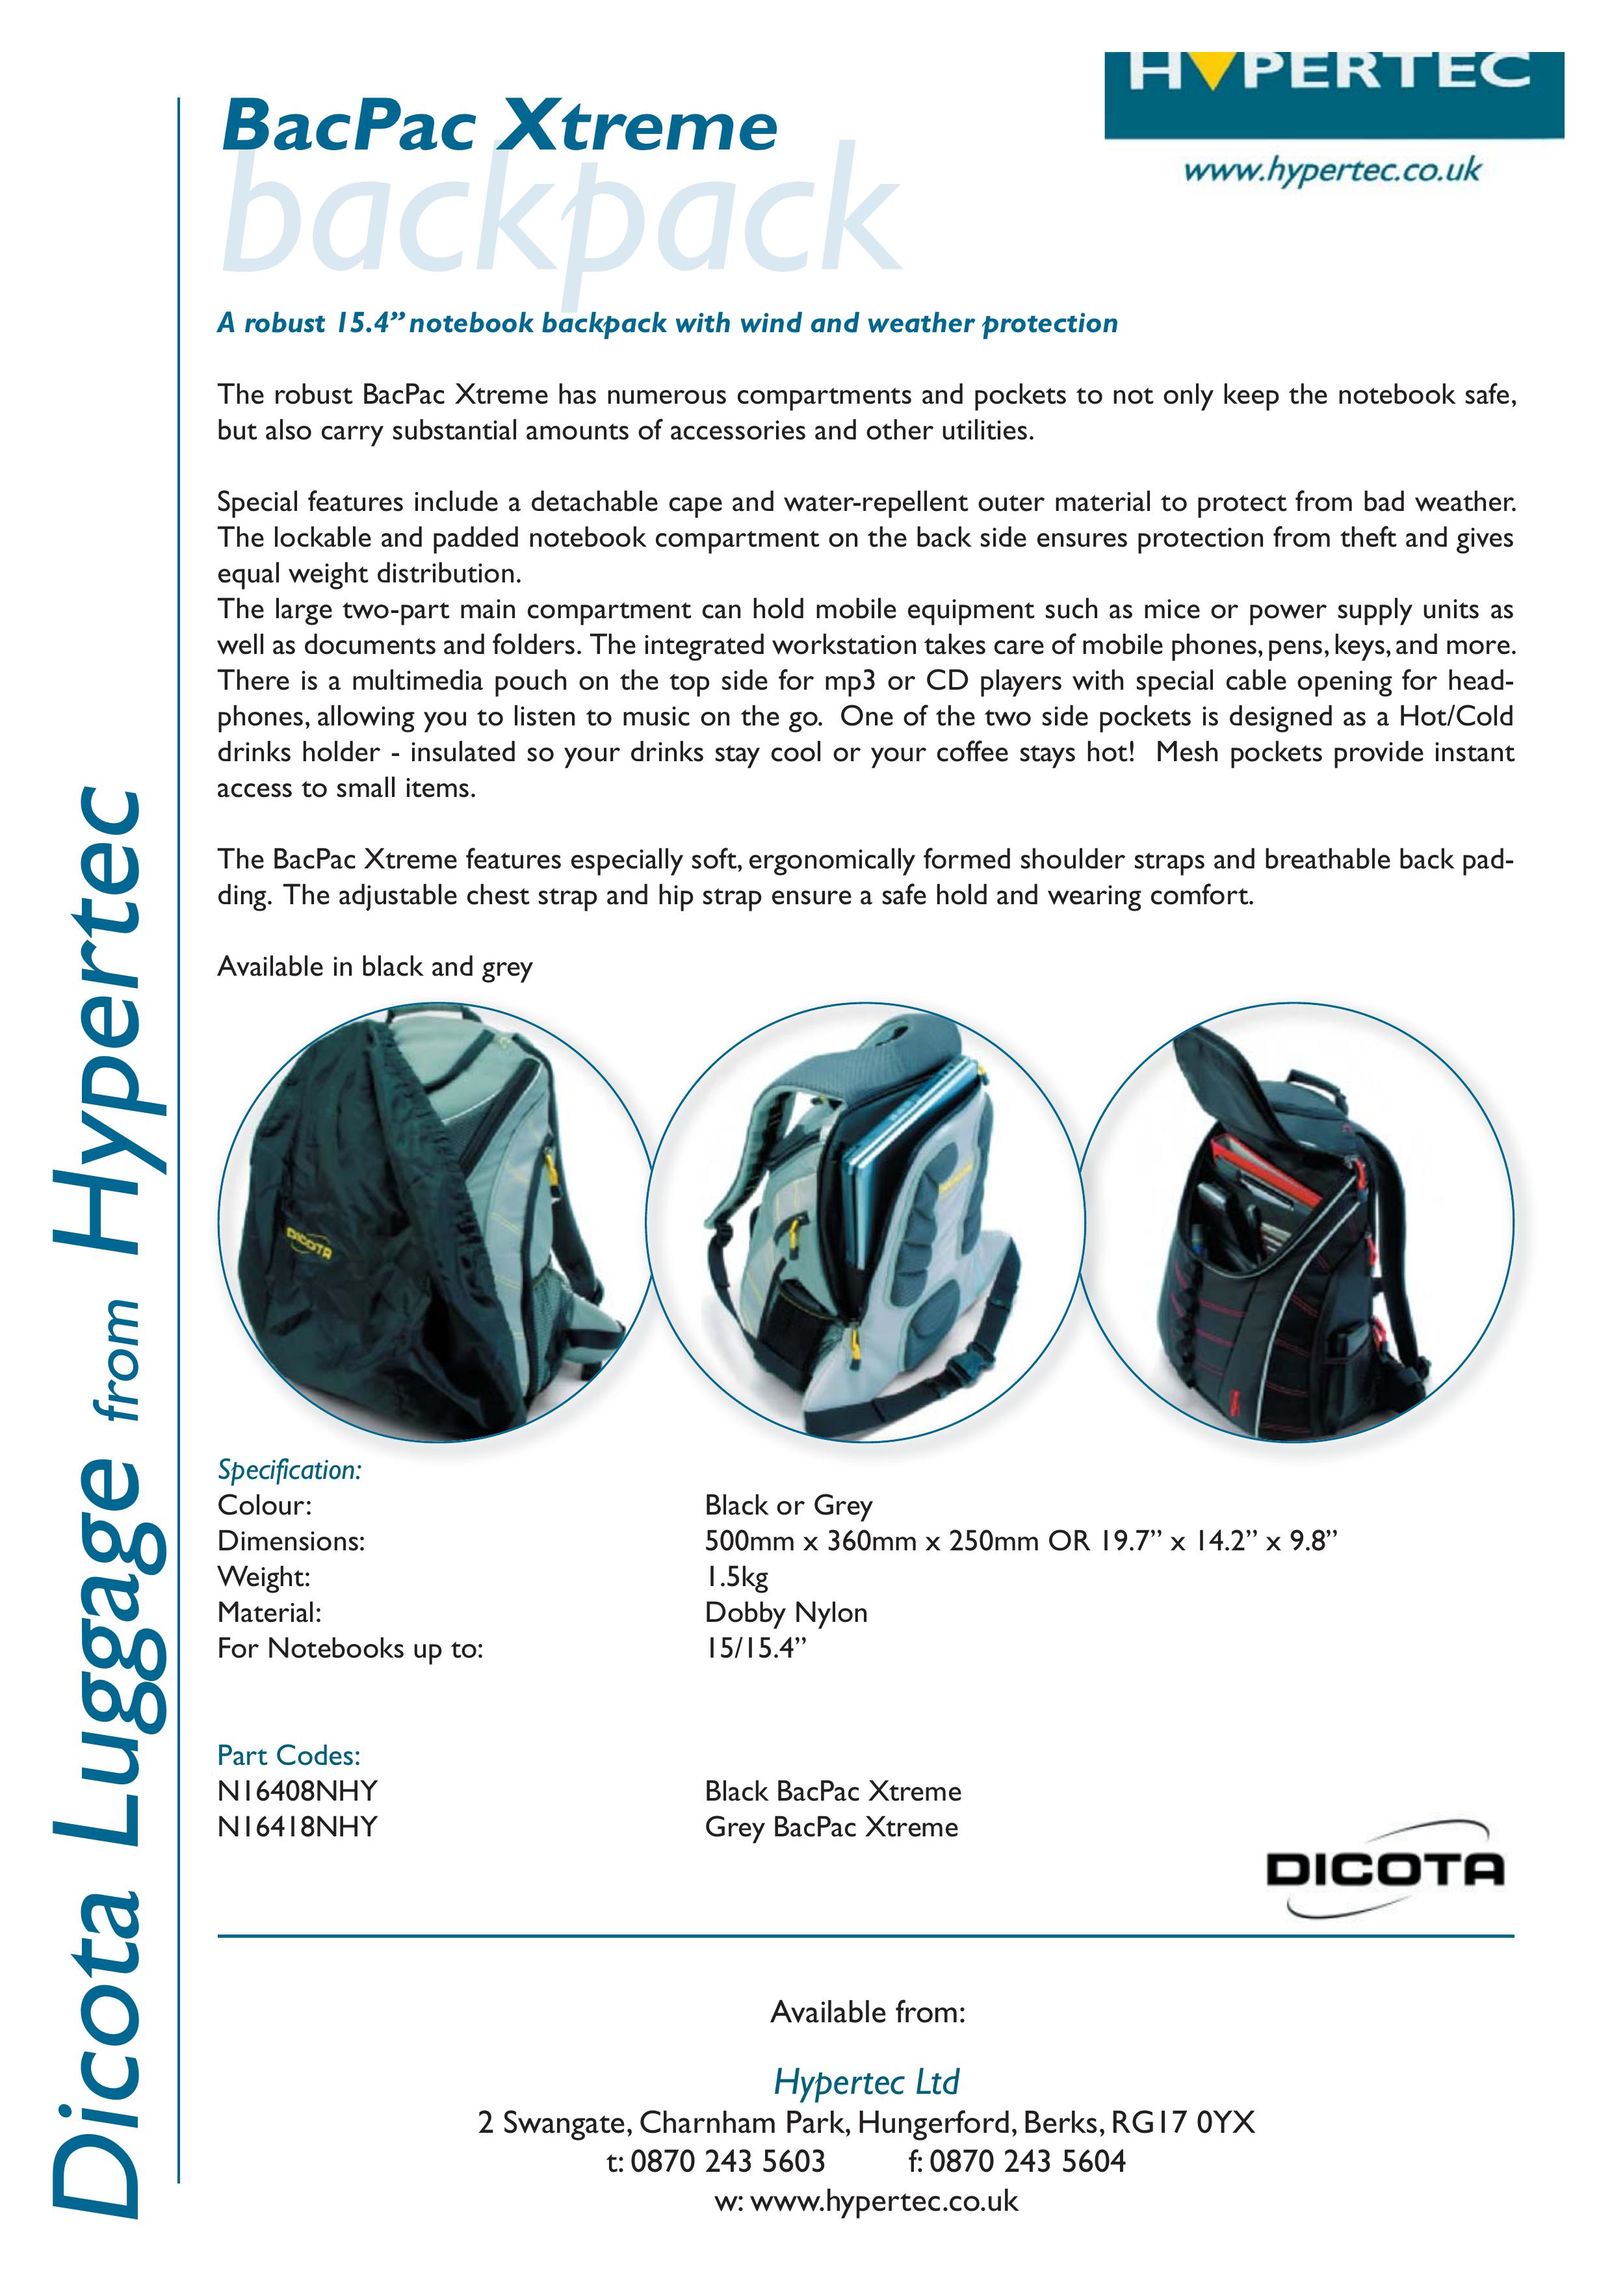 Dicota N16408NHY Carrying Case User Manual